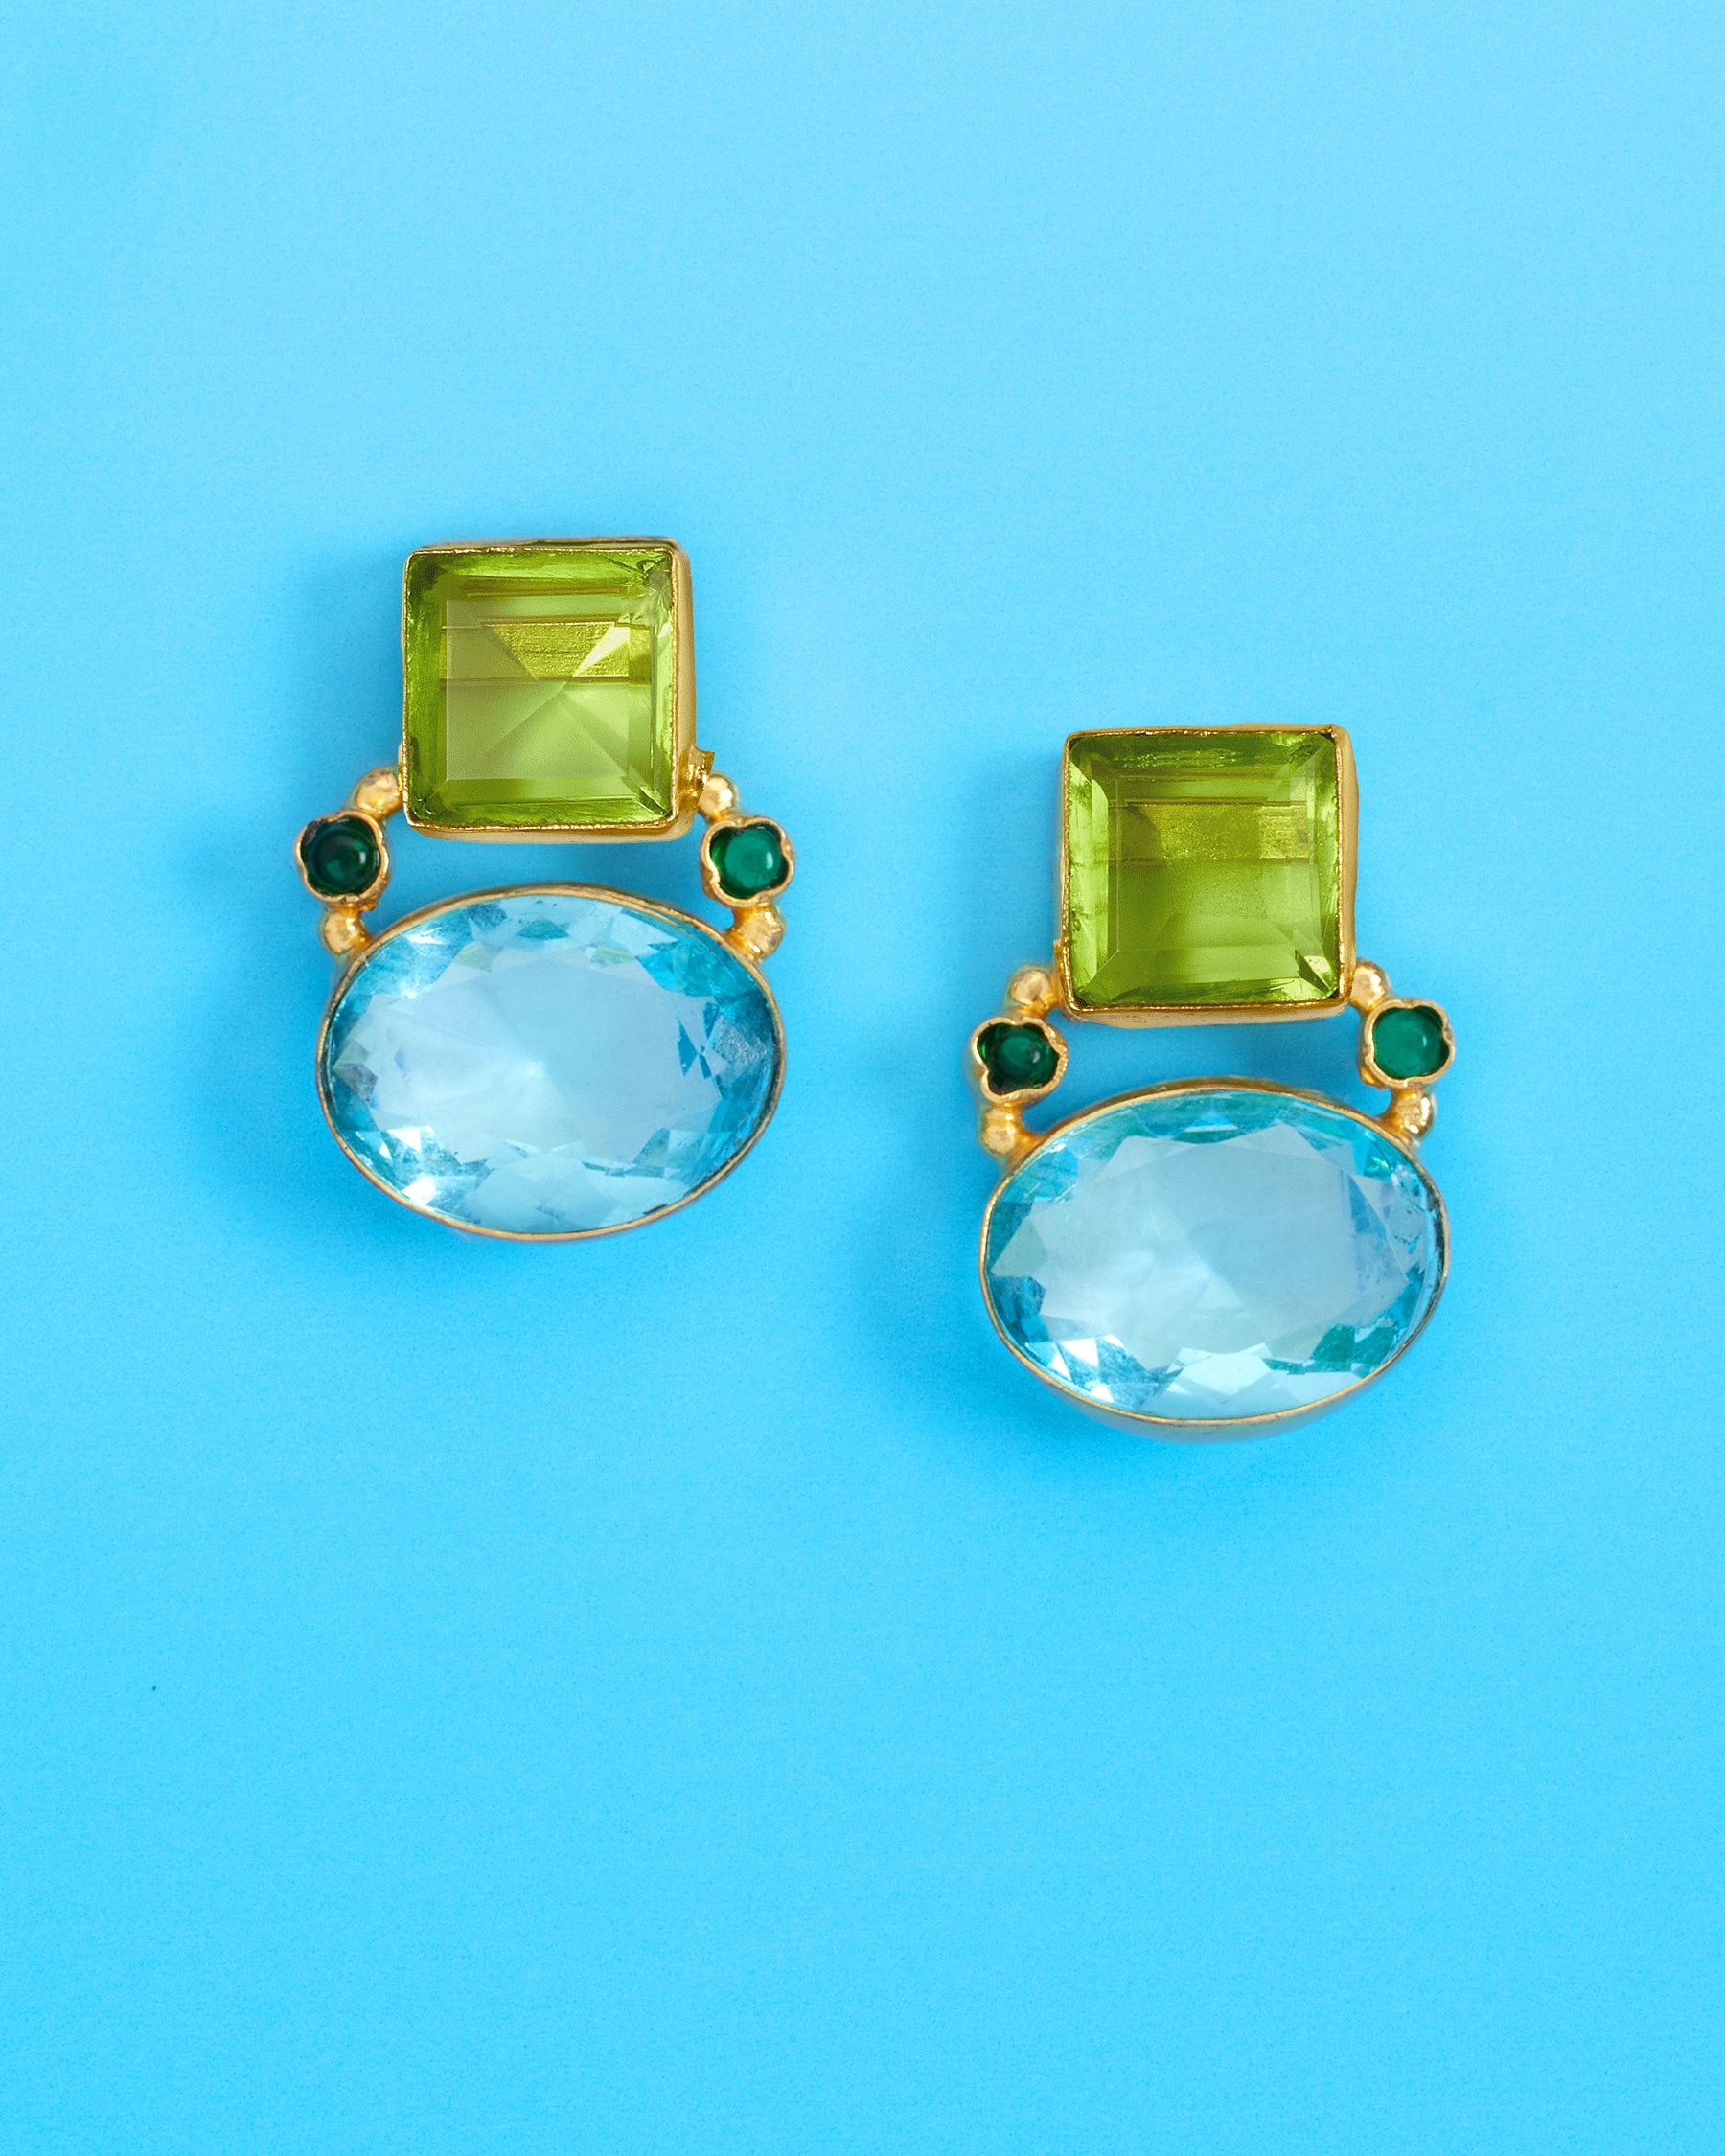 Berkley Geometric Earrings in Turquoise and Lime